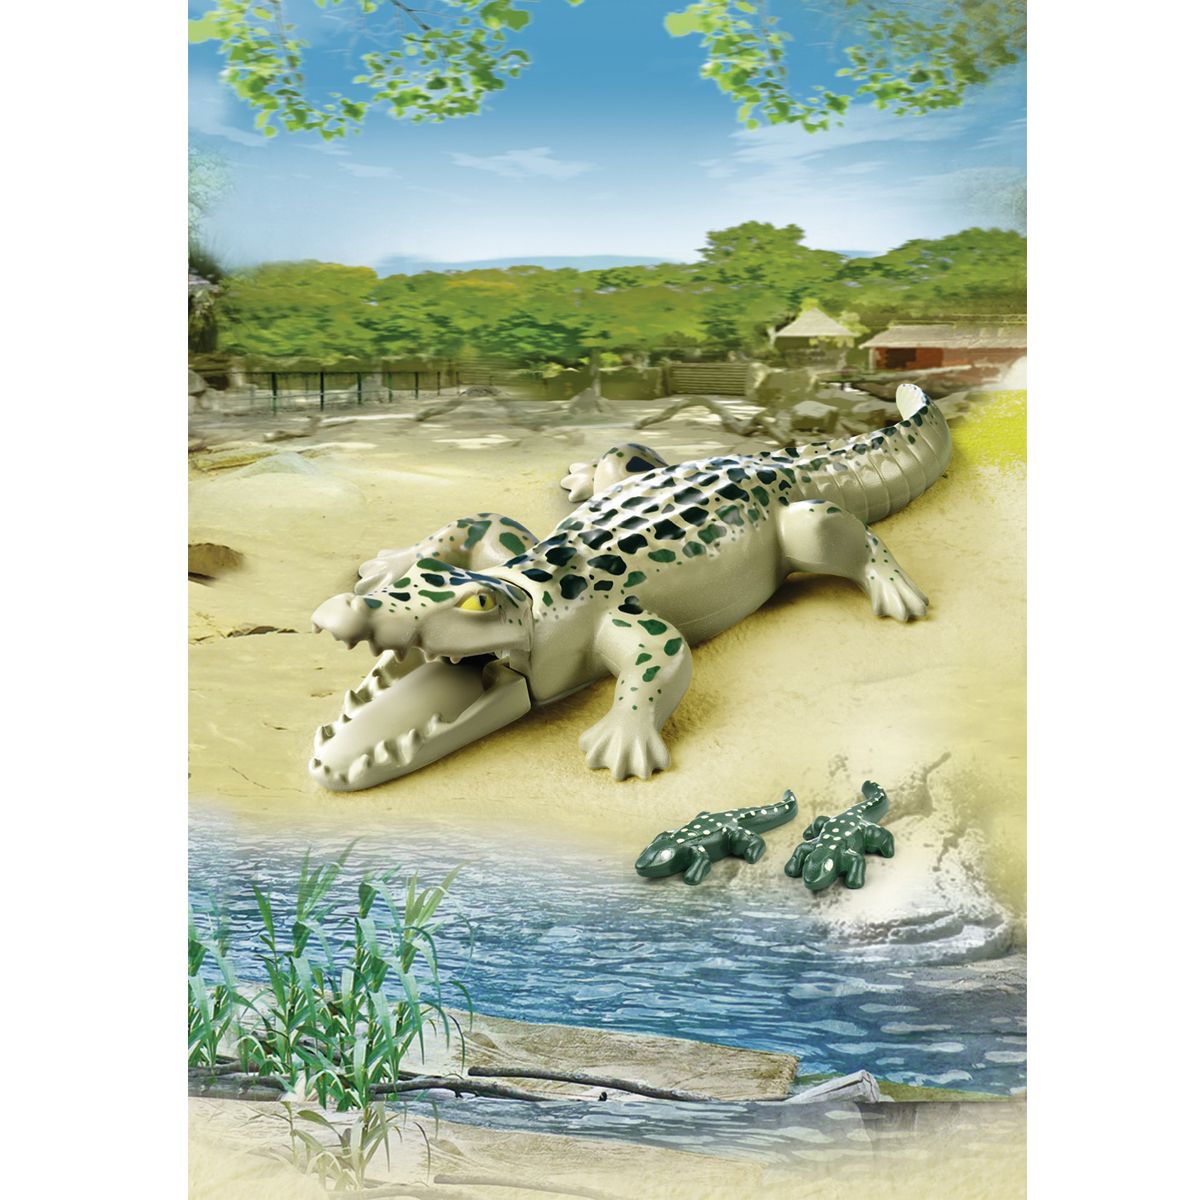 playmobil alligator